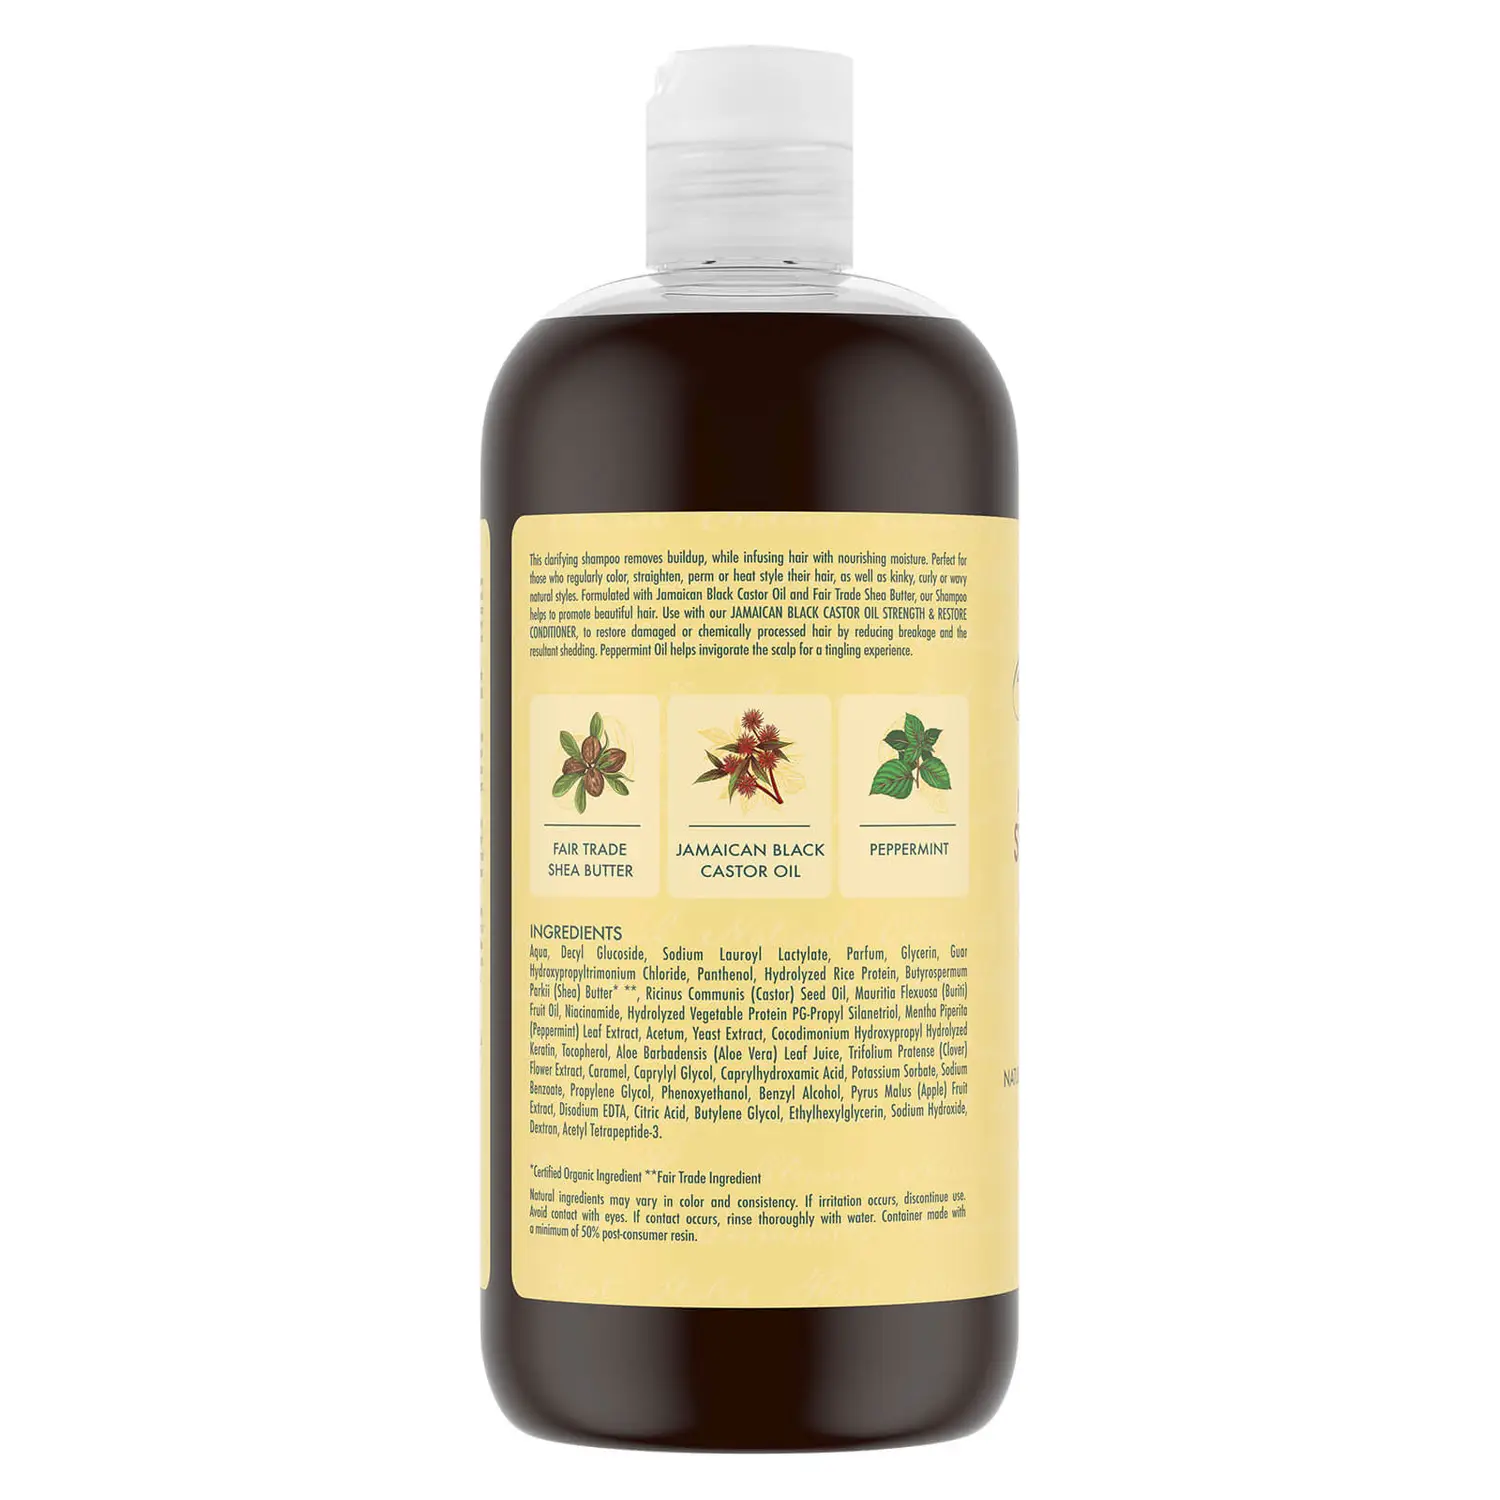 Shea Moisture Jamaican Black Castor Oil Strengthen & Restore Shampoo 384ml